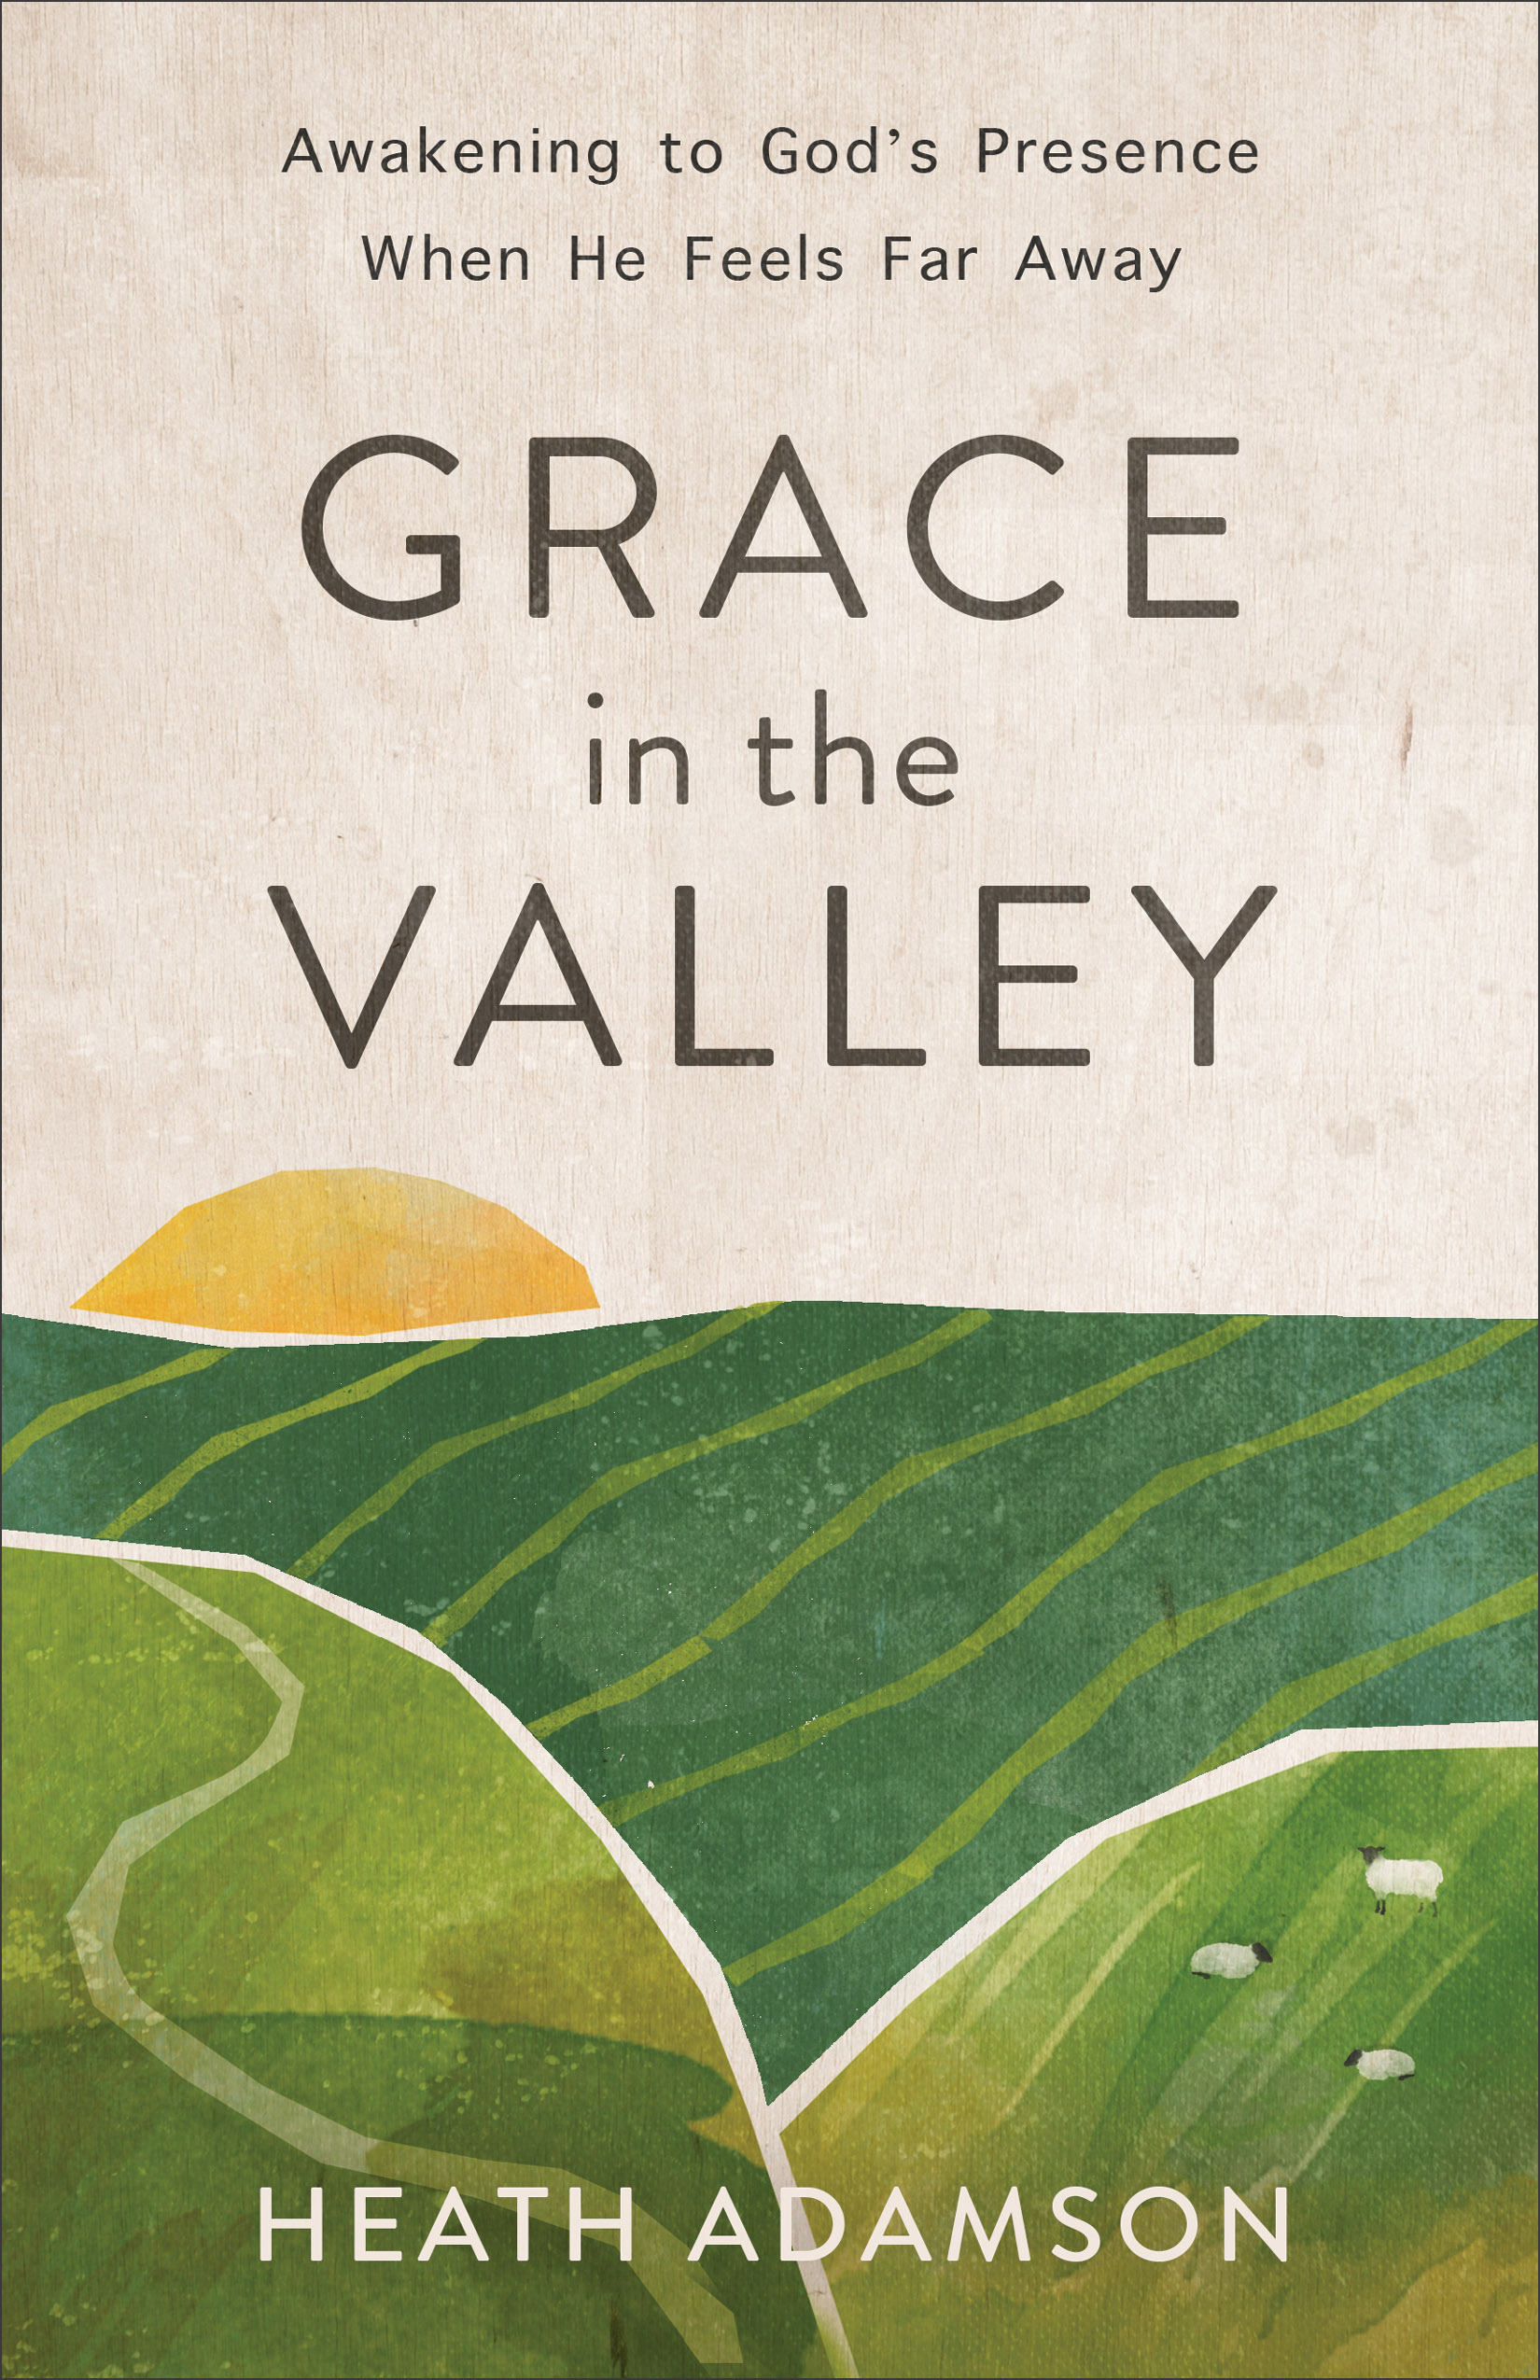 Grace Valley. Feel to far